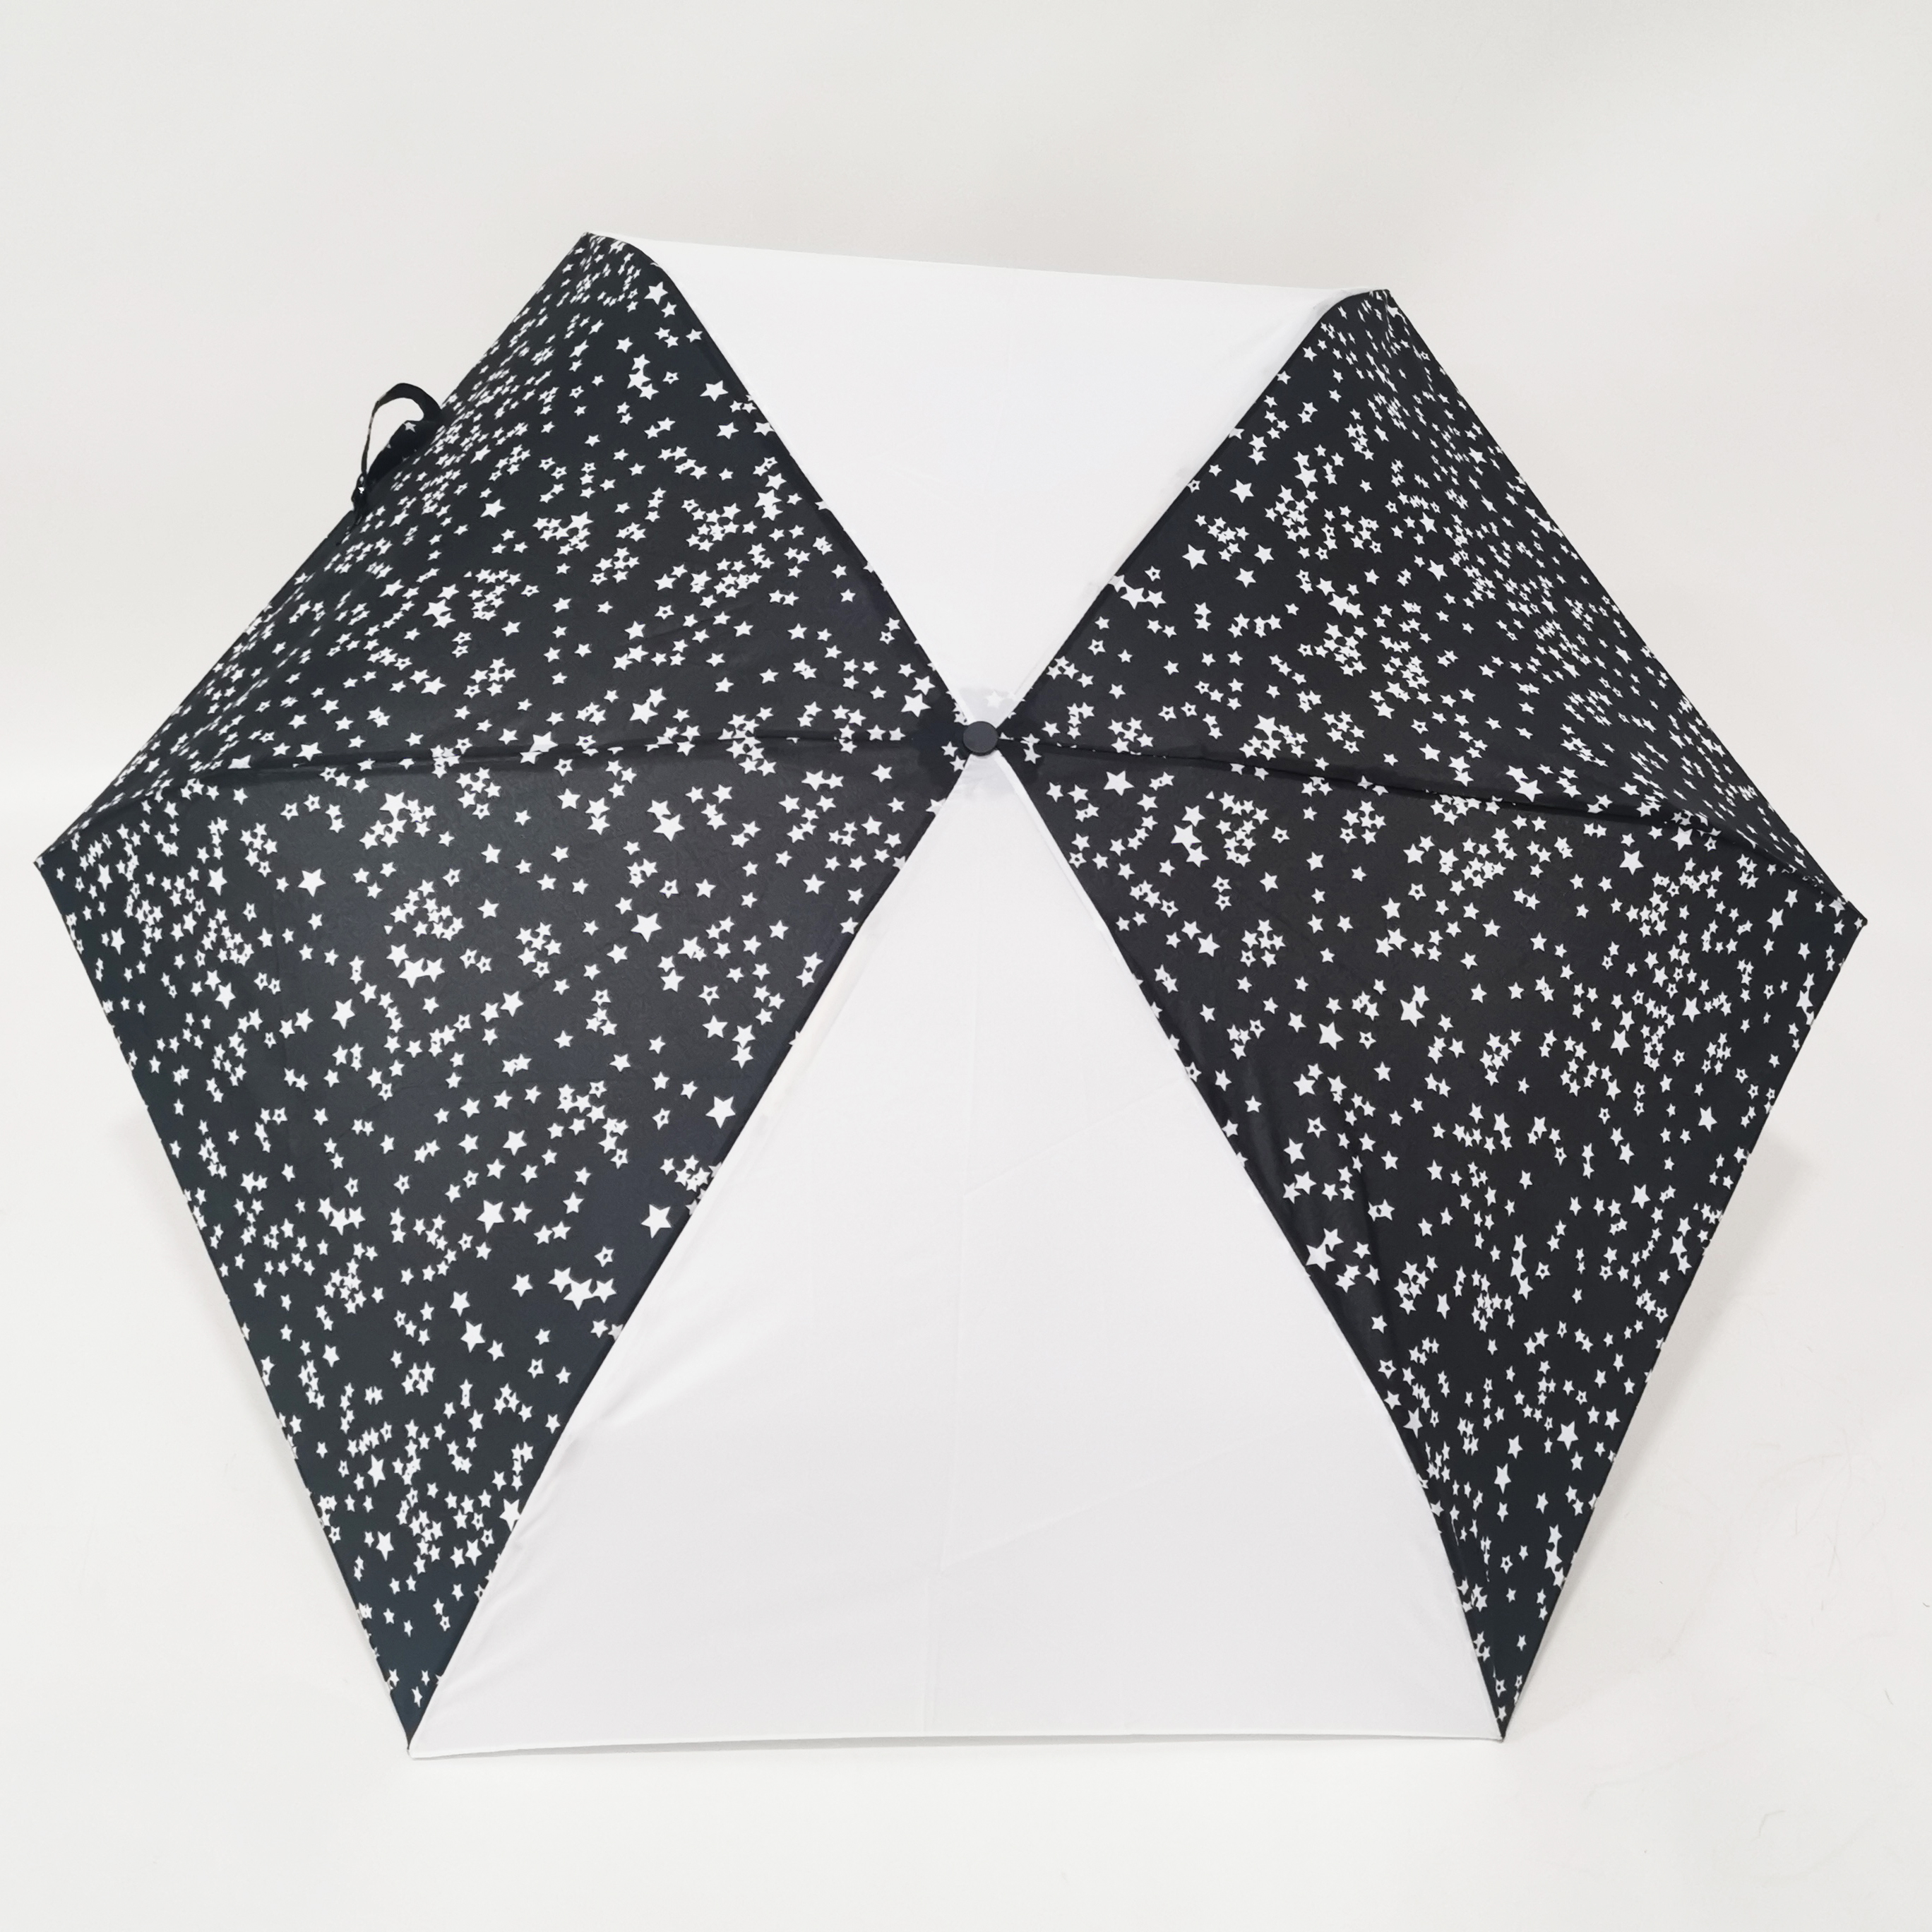 https://www.hodaumbrella.com/just-205g-an-two-folding-umbrella-product/